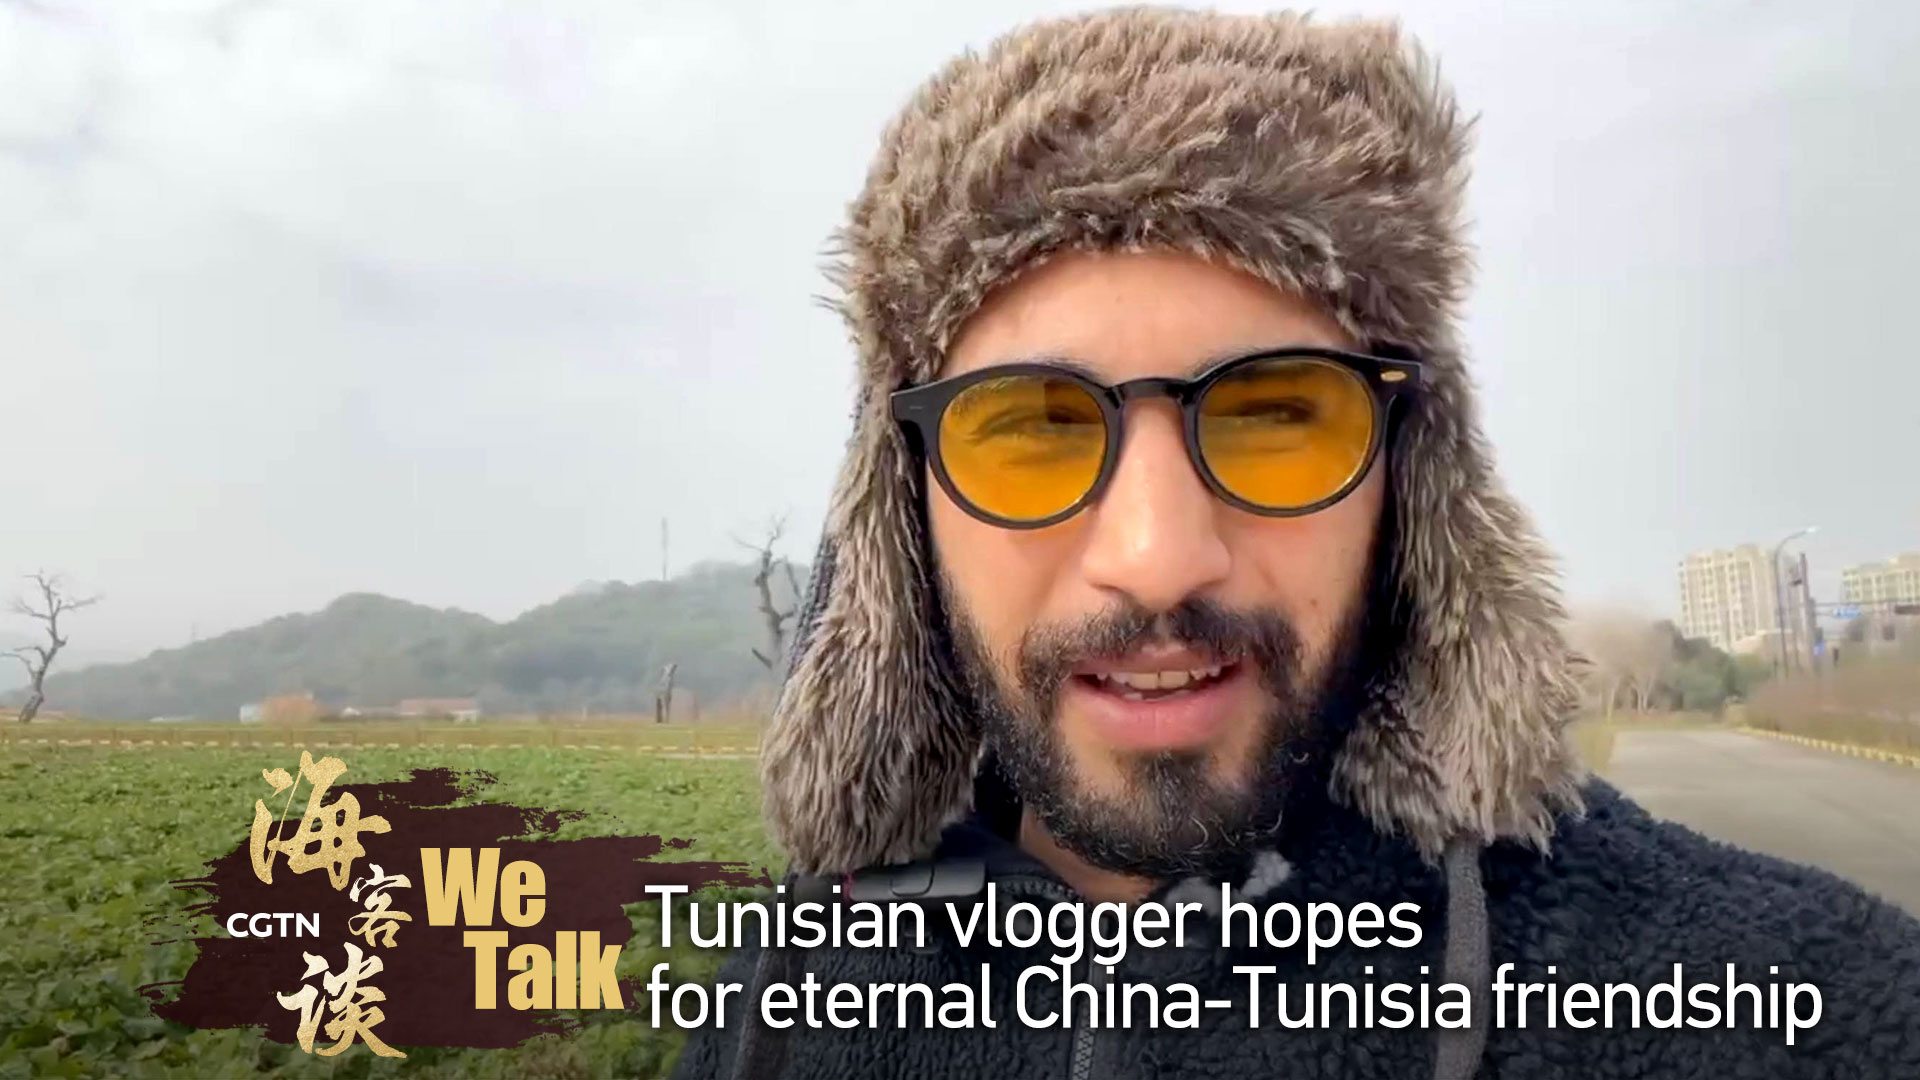 Tunisian vlogger hopes for eternal China-Tunisia friendship